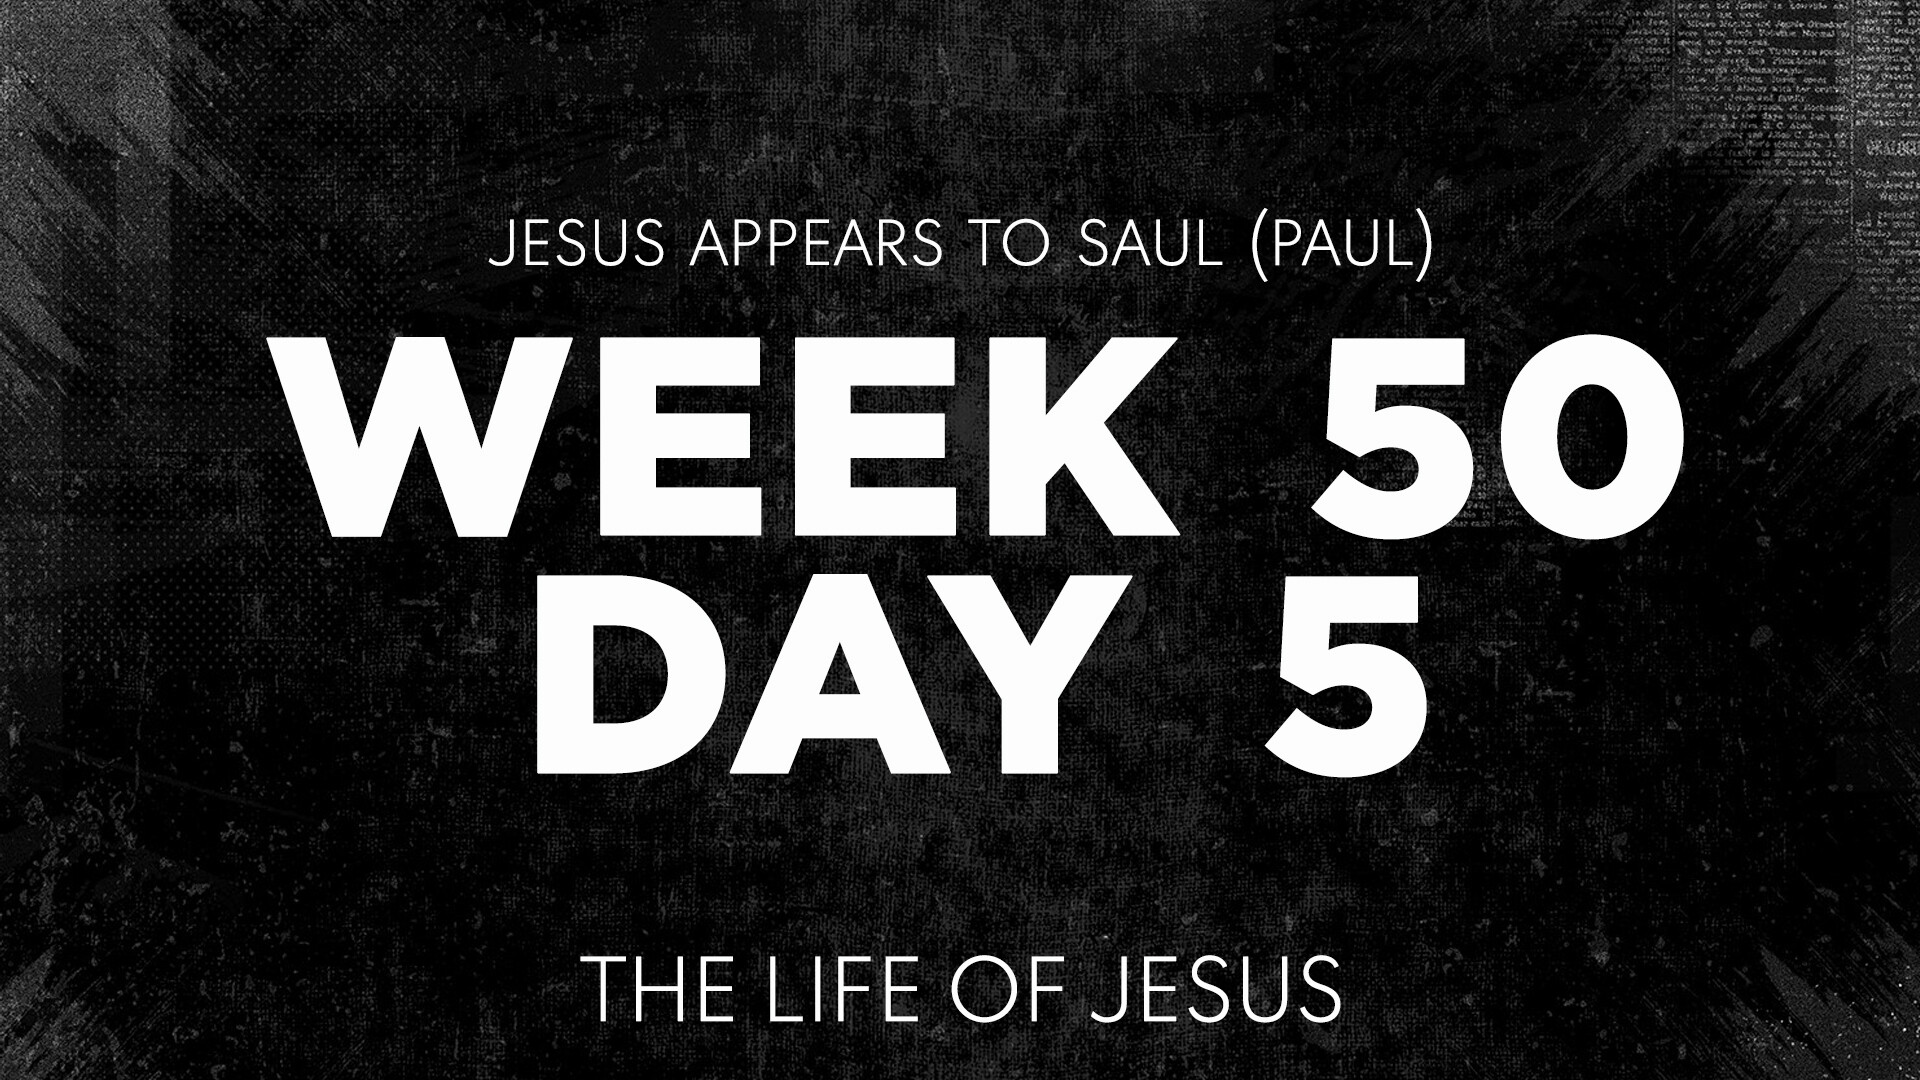 Week 50 Day 5